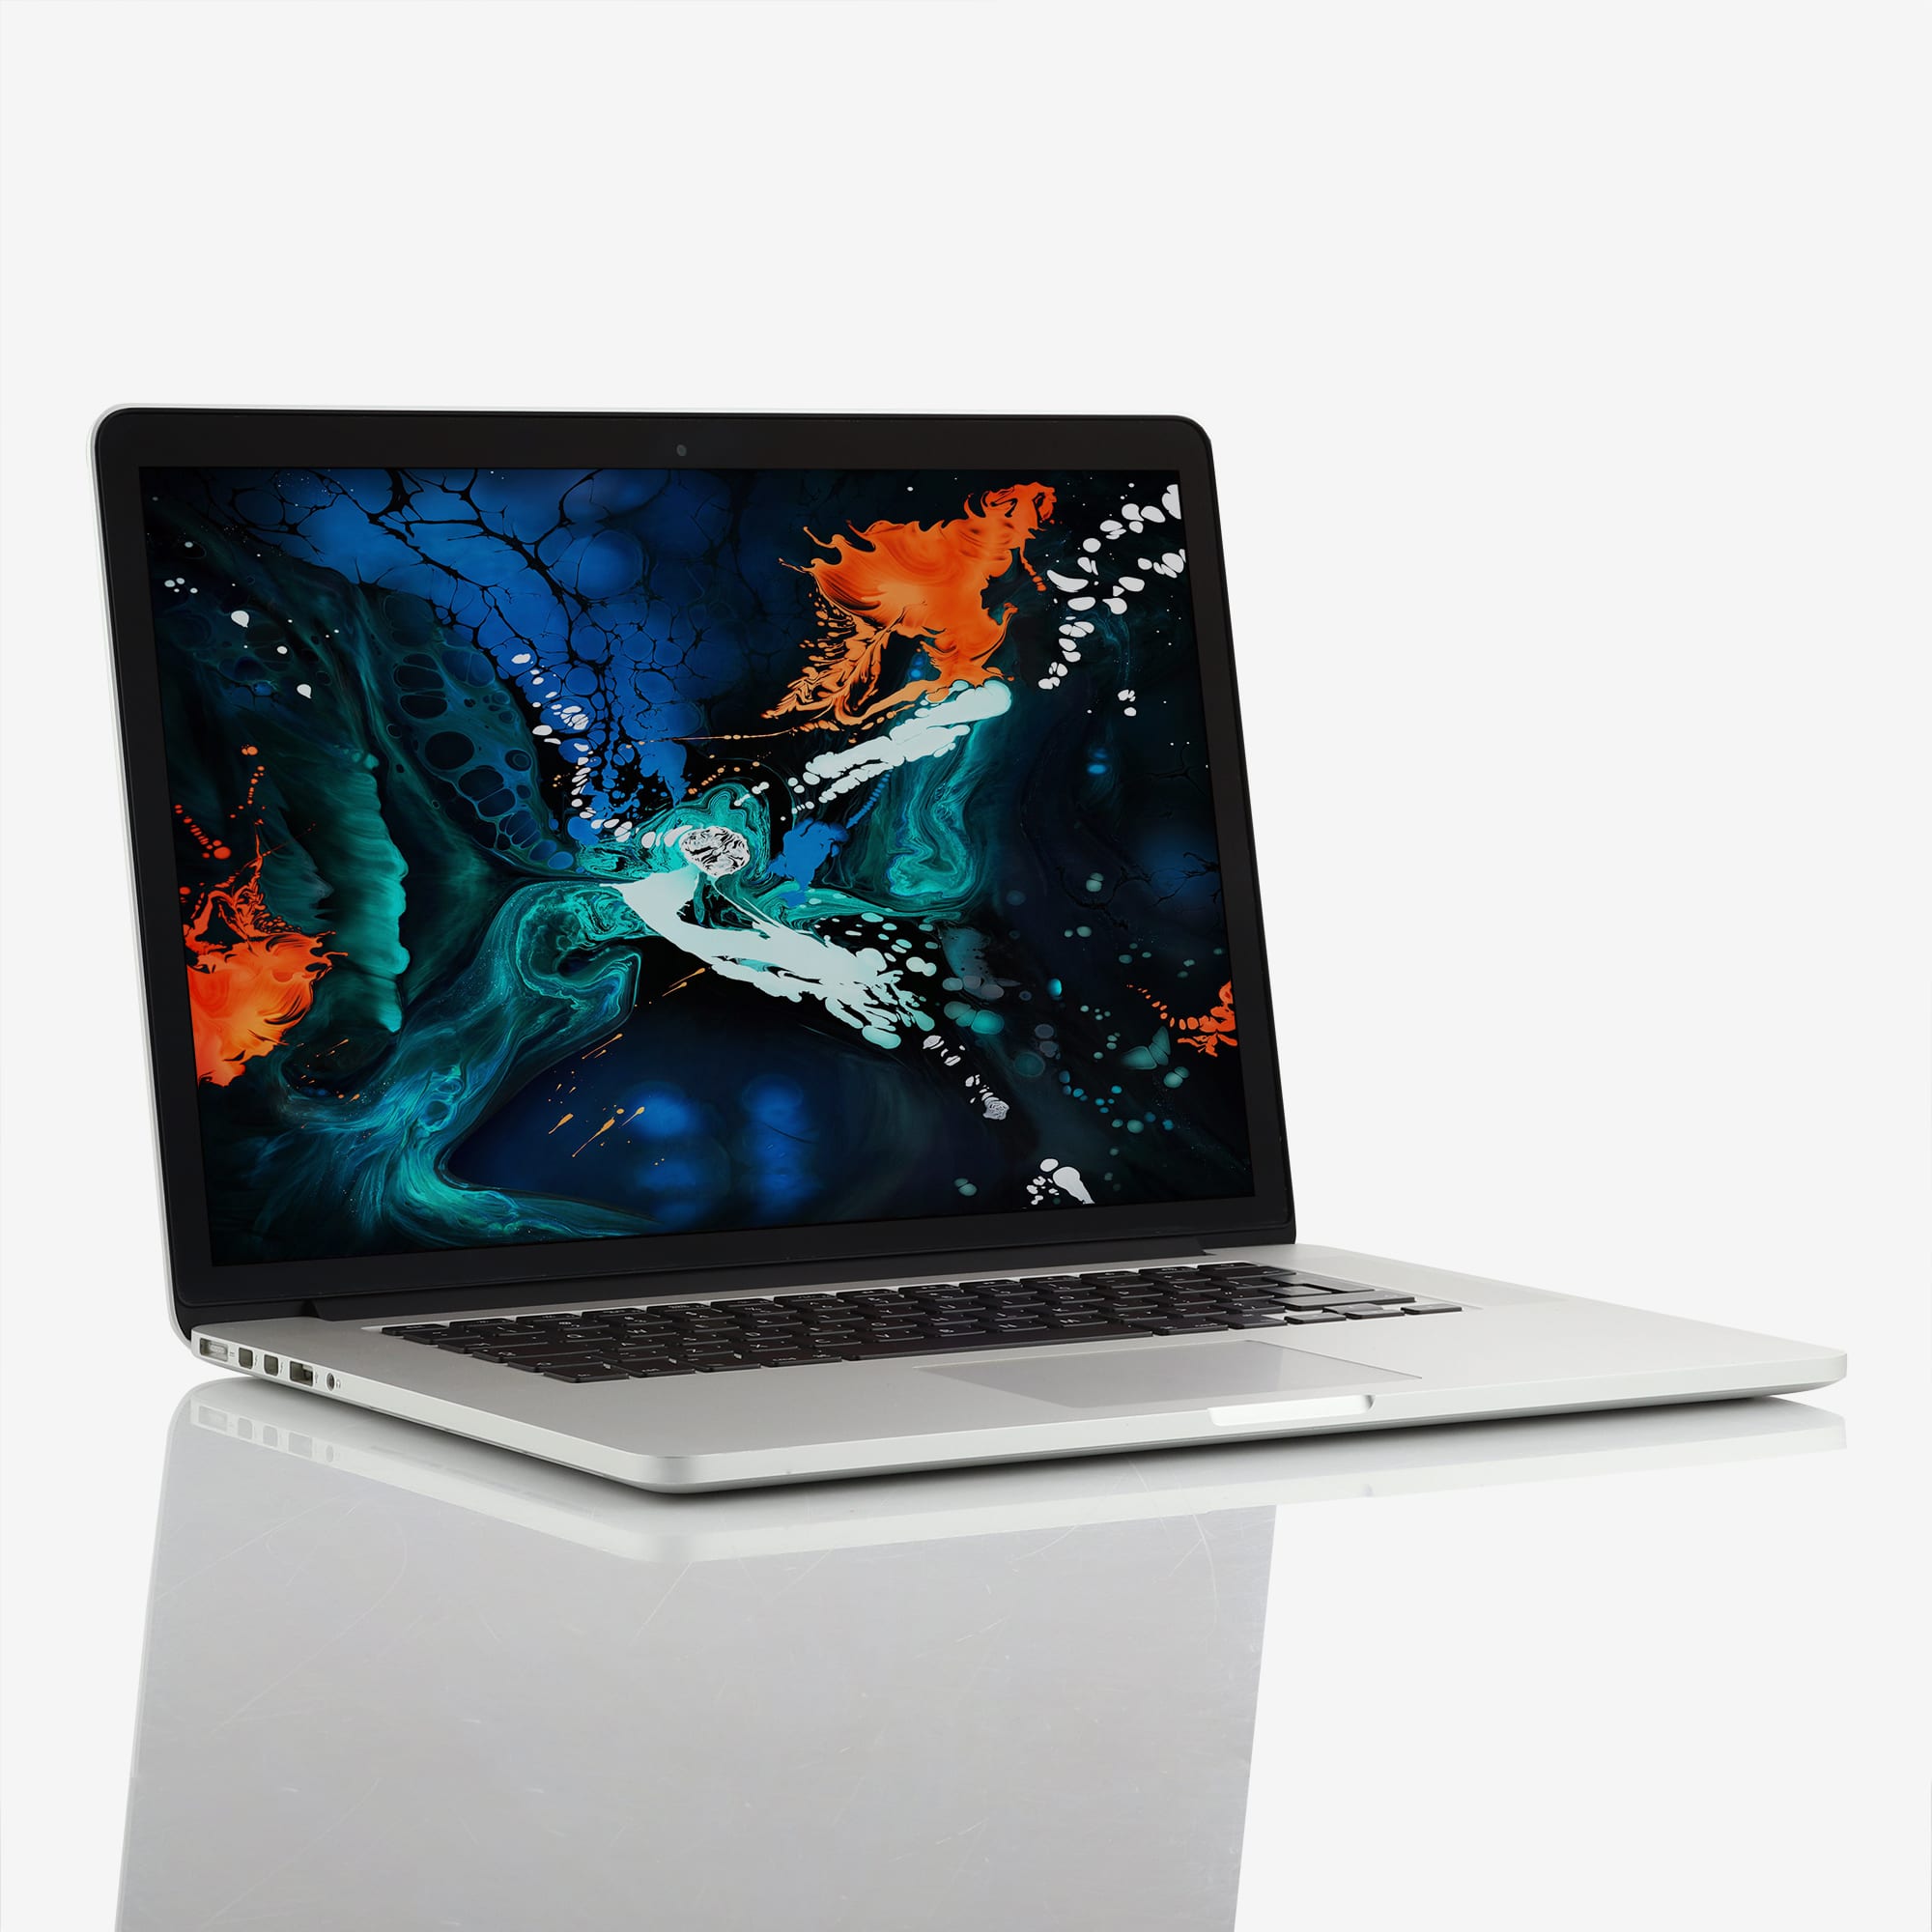 1 x Apple MacBook Pro Retina 15 Inch Quad Core i7 2.00 GHz (2013)